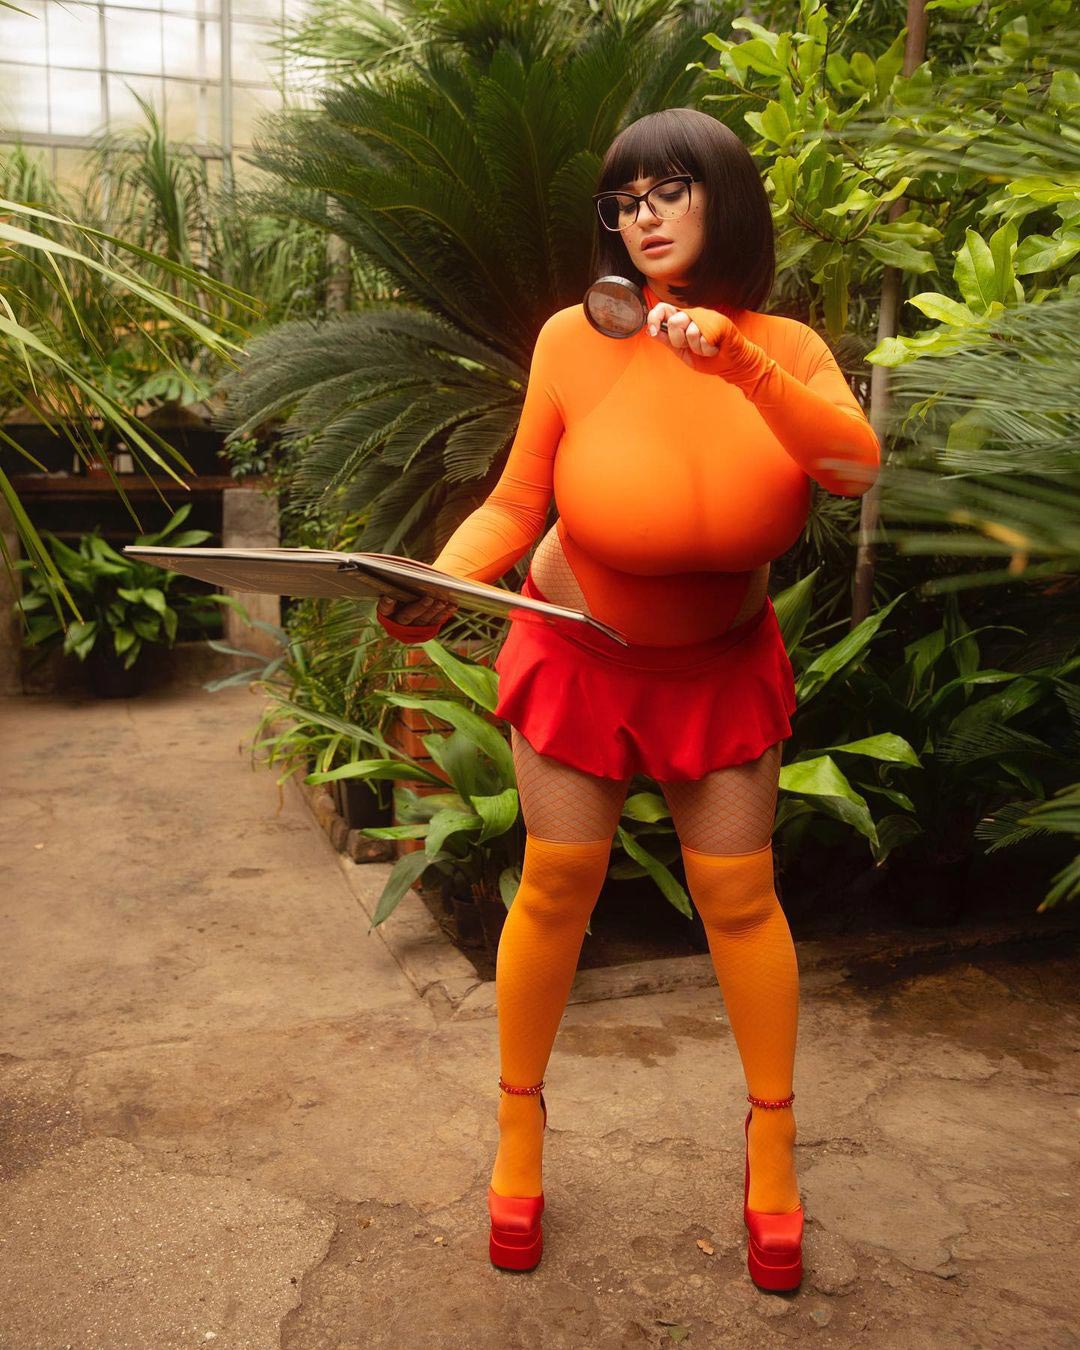 Demmy Blaze as Velma from Scooby-Doo â€“ The Boobs Blog